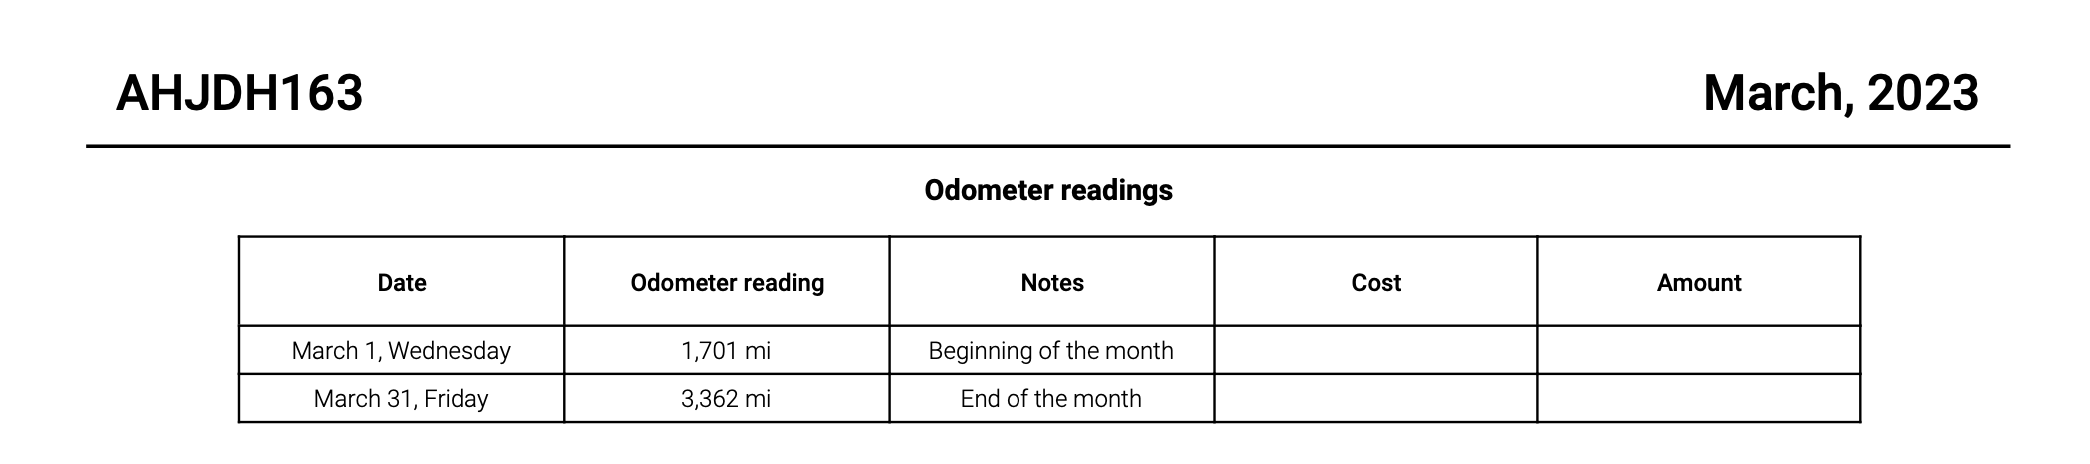 mileagewise odometer reading summary